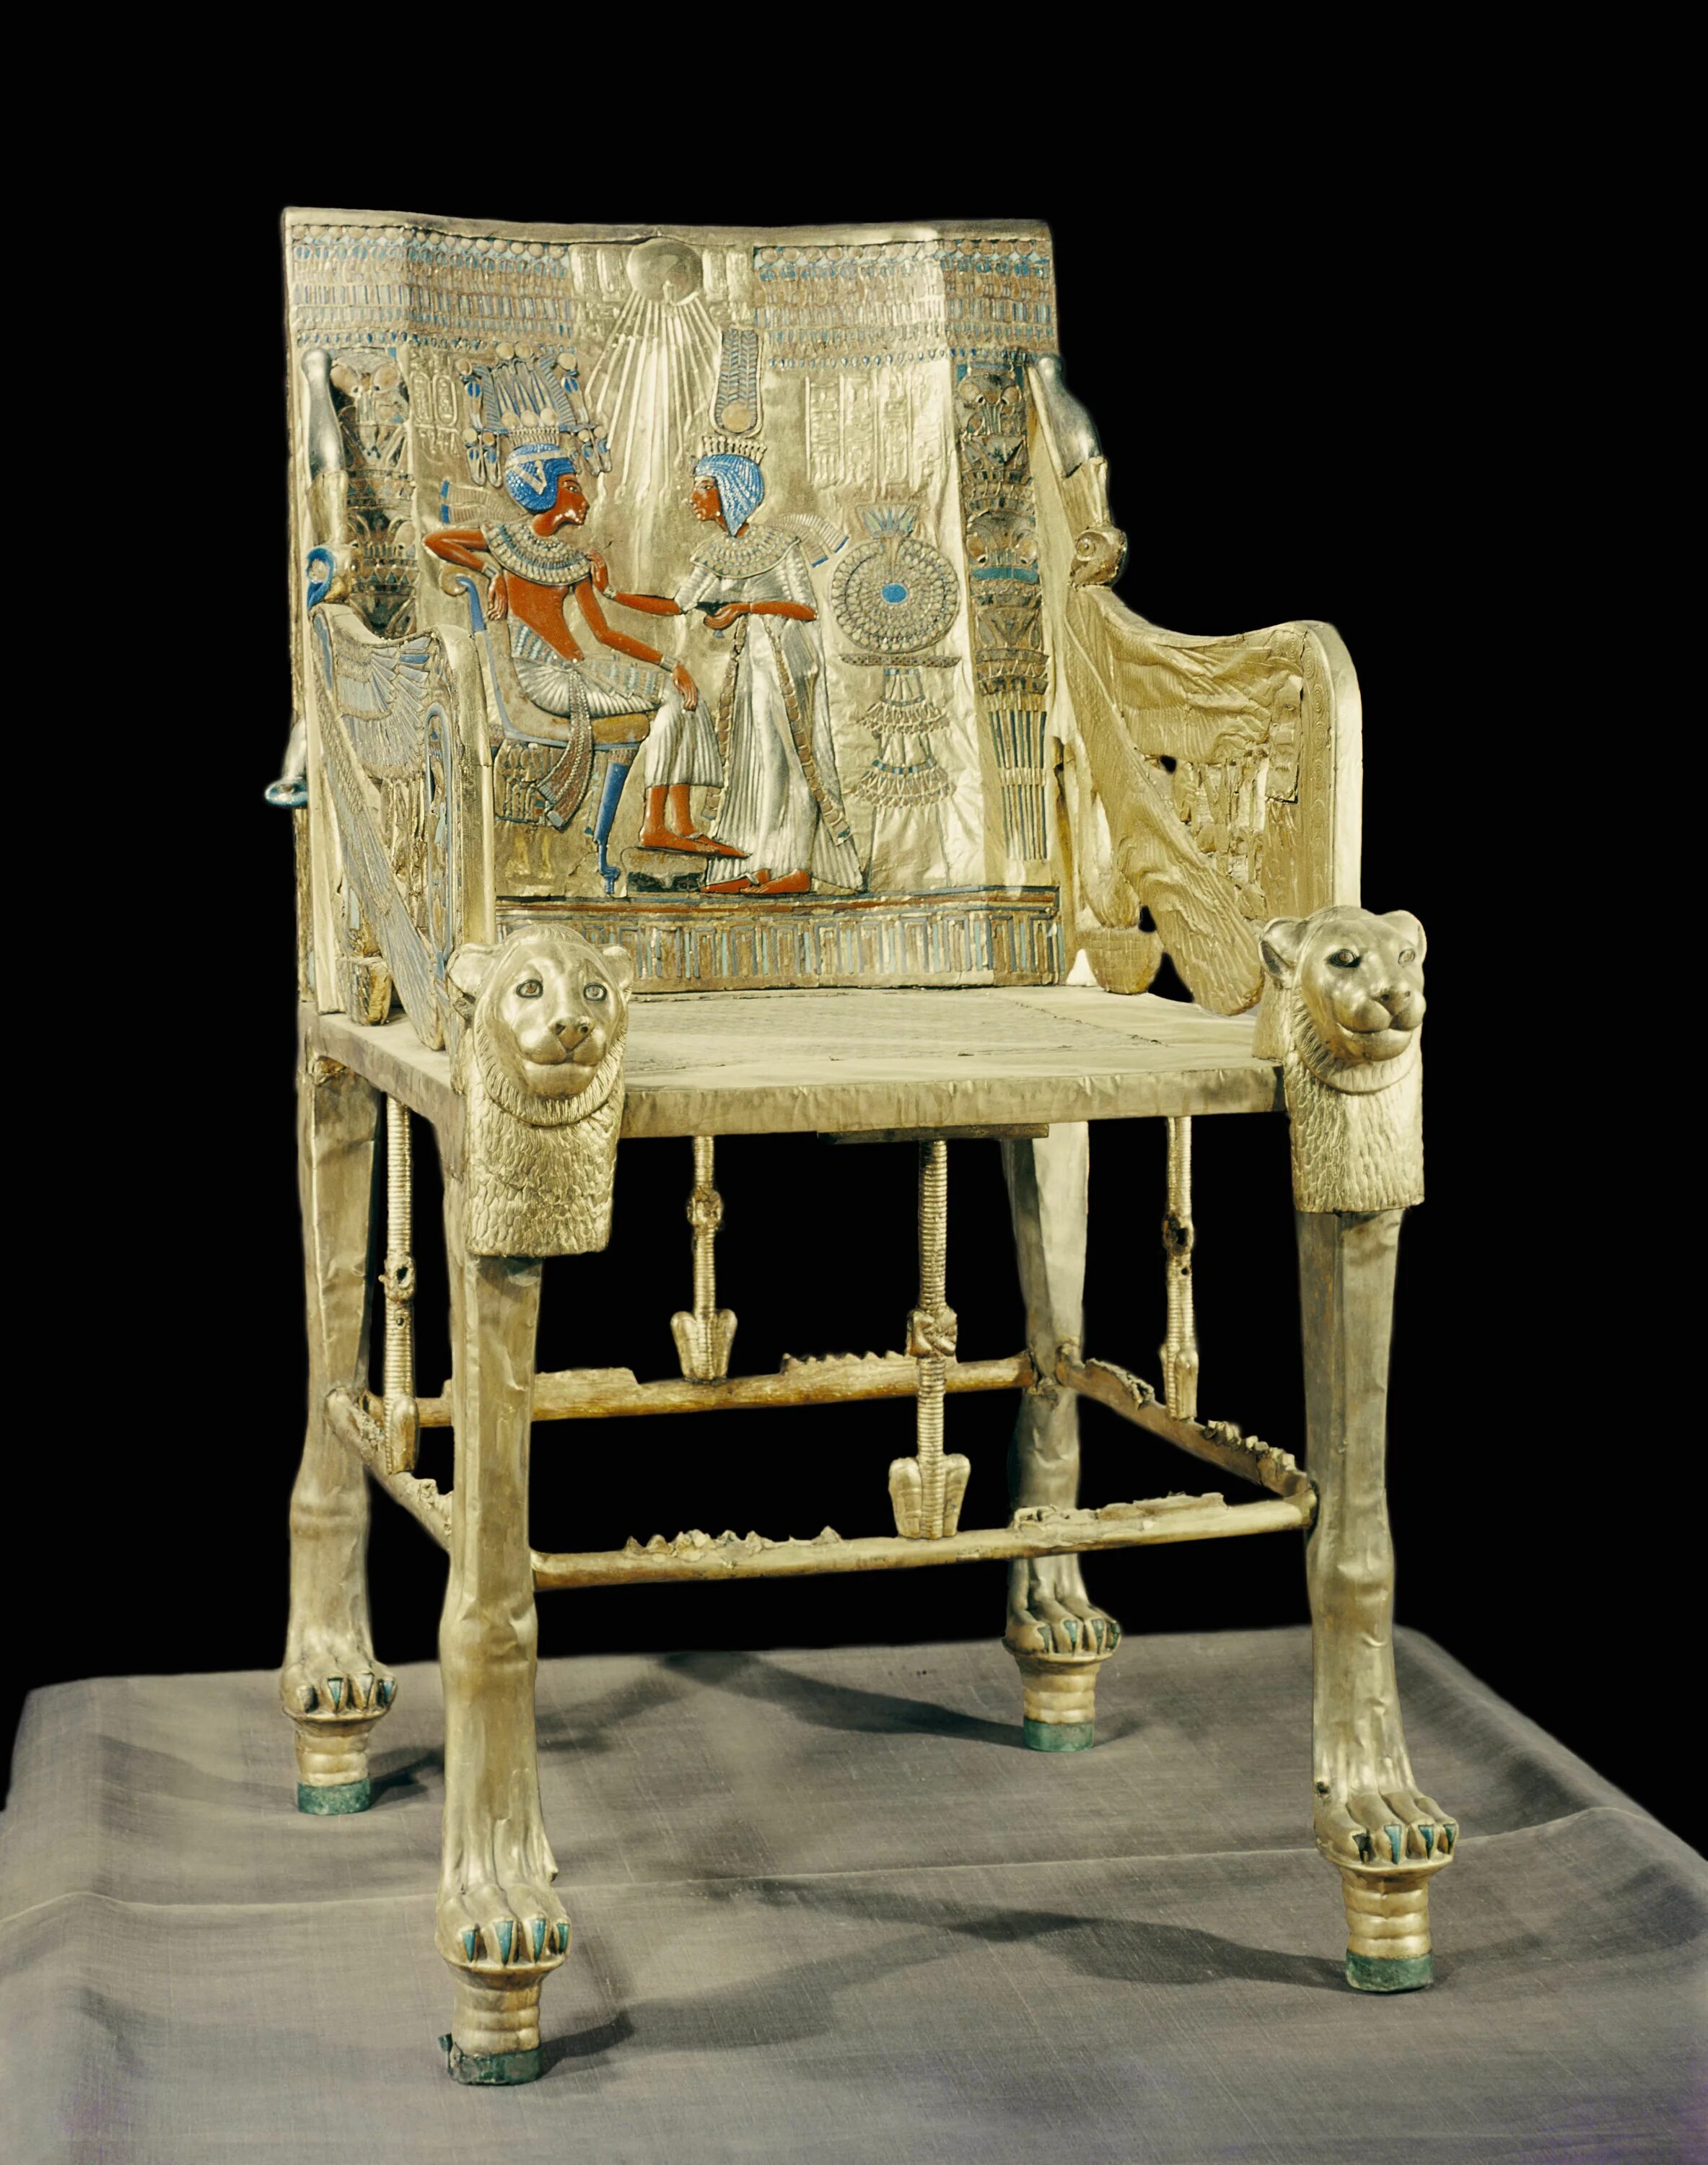 Трон фараона тутанхамона. Золотой трон Тутанхамона. Древний Египет трон Тутанхамона. Древний Египет золотой трон Тутанхамона. Кресло фараона Тутанхамона.